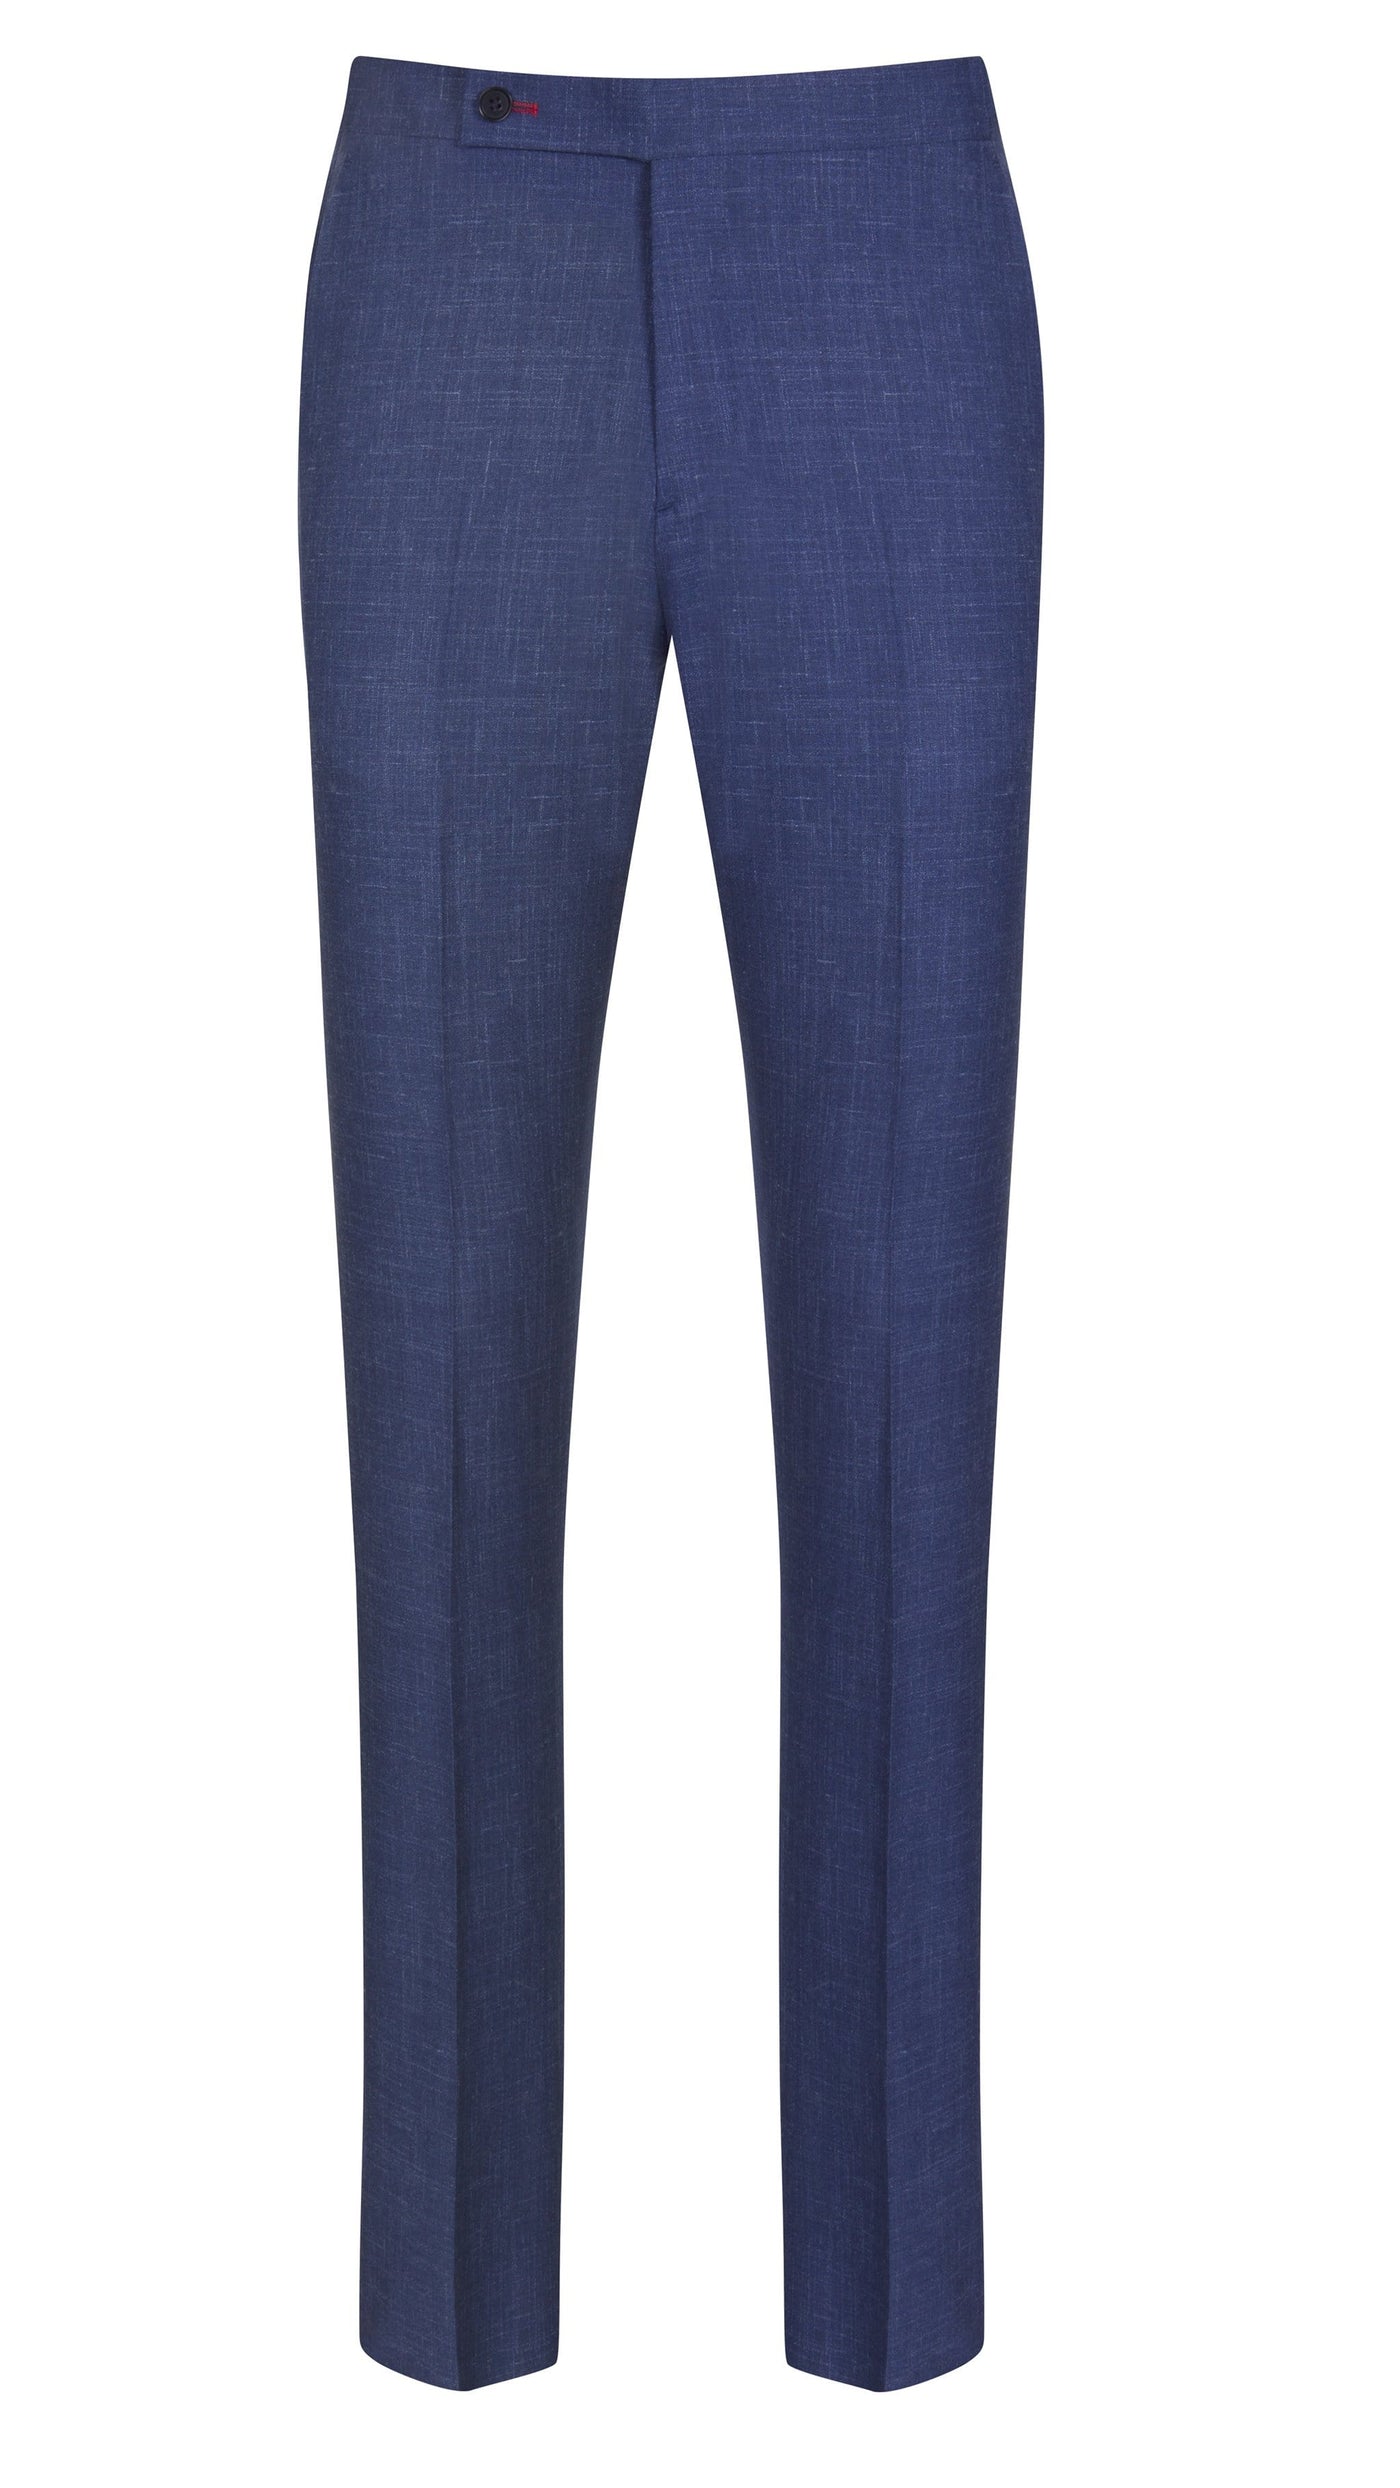 Blue Linen Trousers - Mark marengo